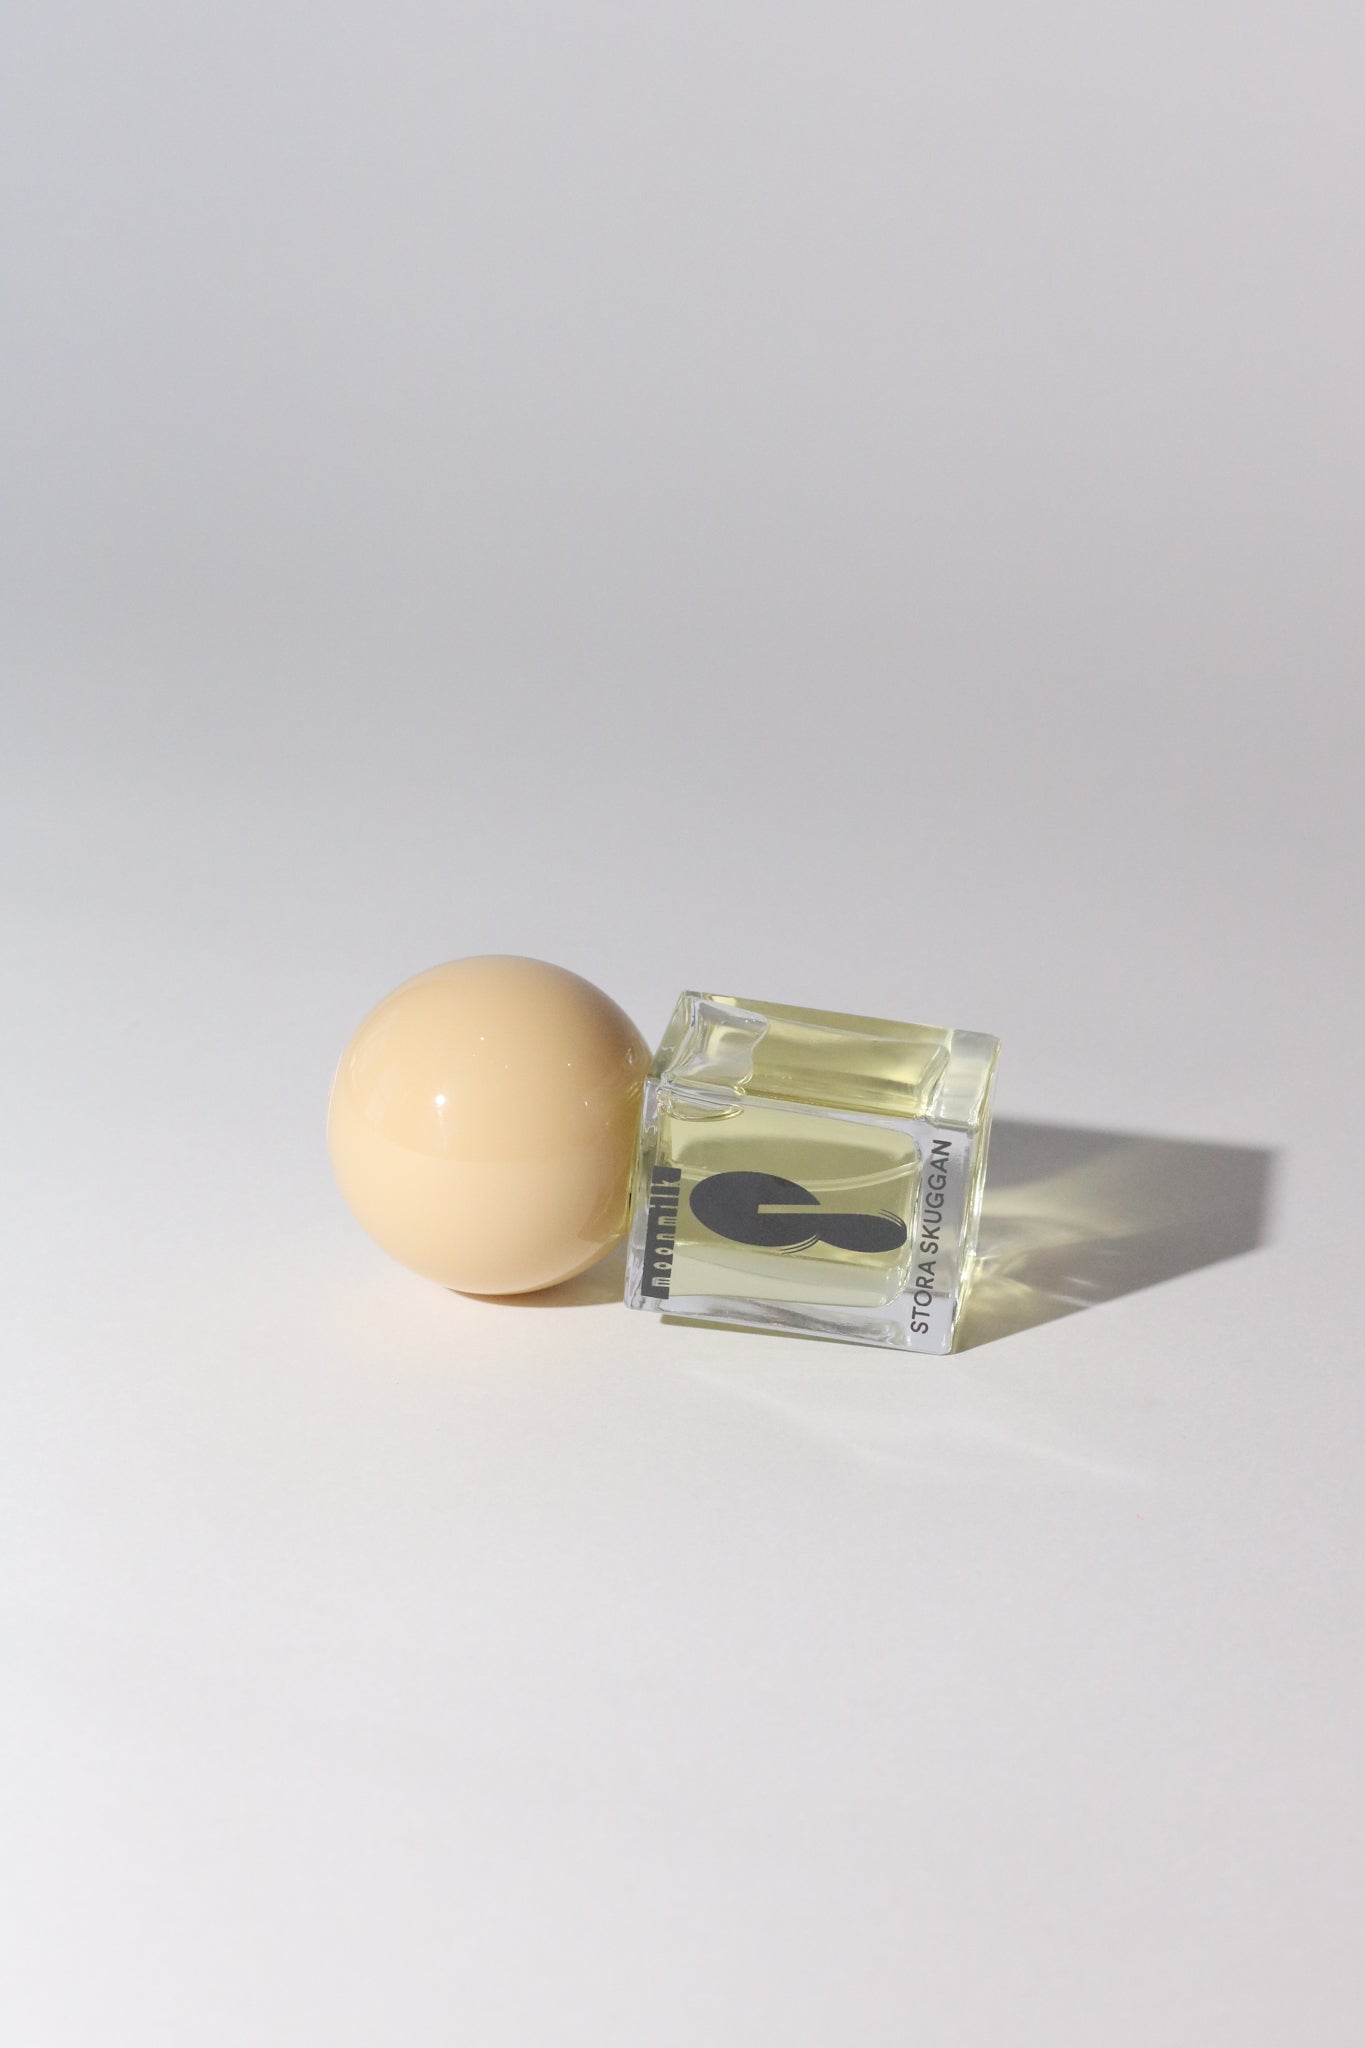 Stora Skuggan Moonmilk Eau de Parfum 30mL | Shop Sommer